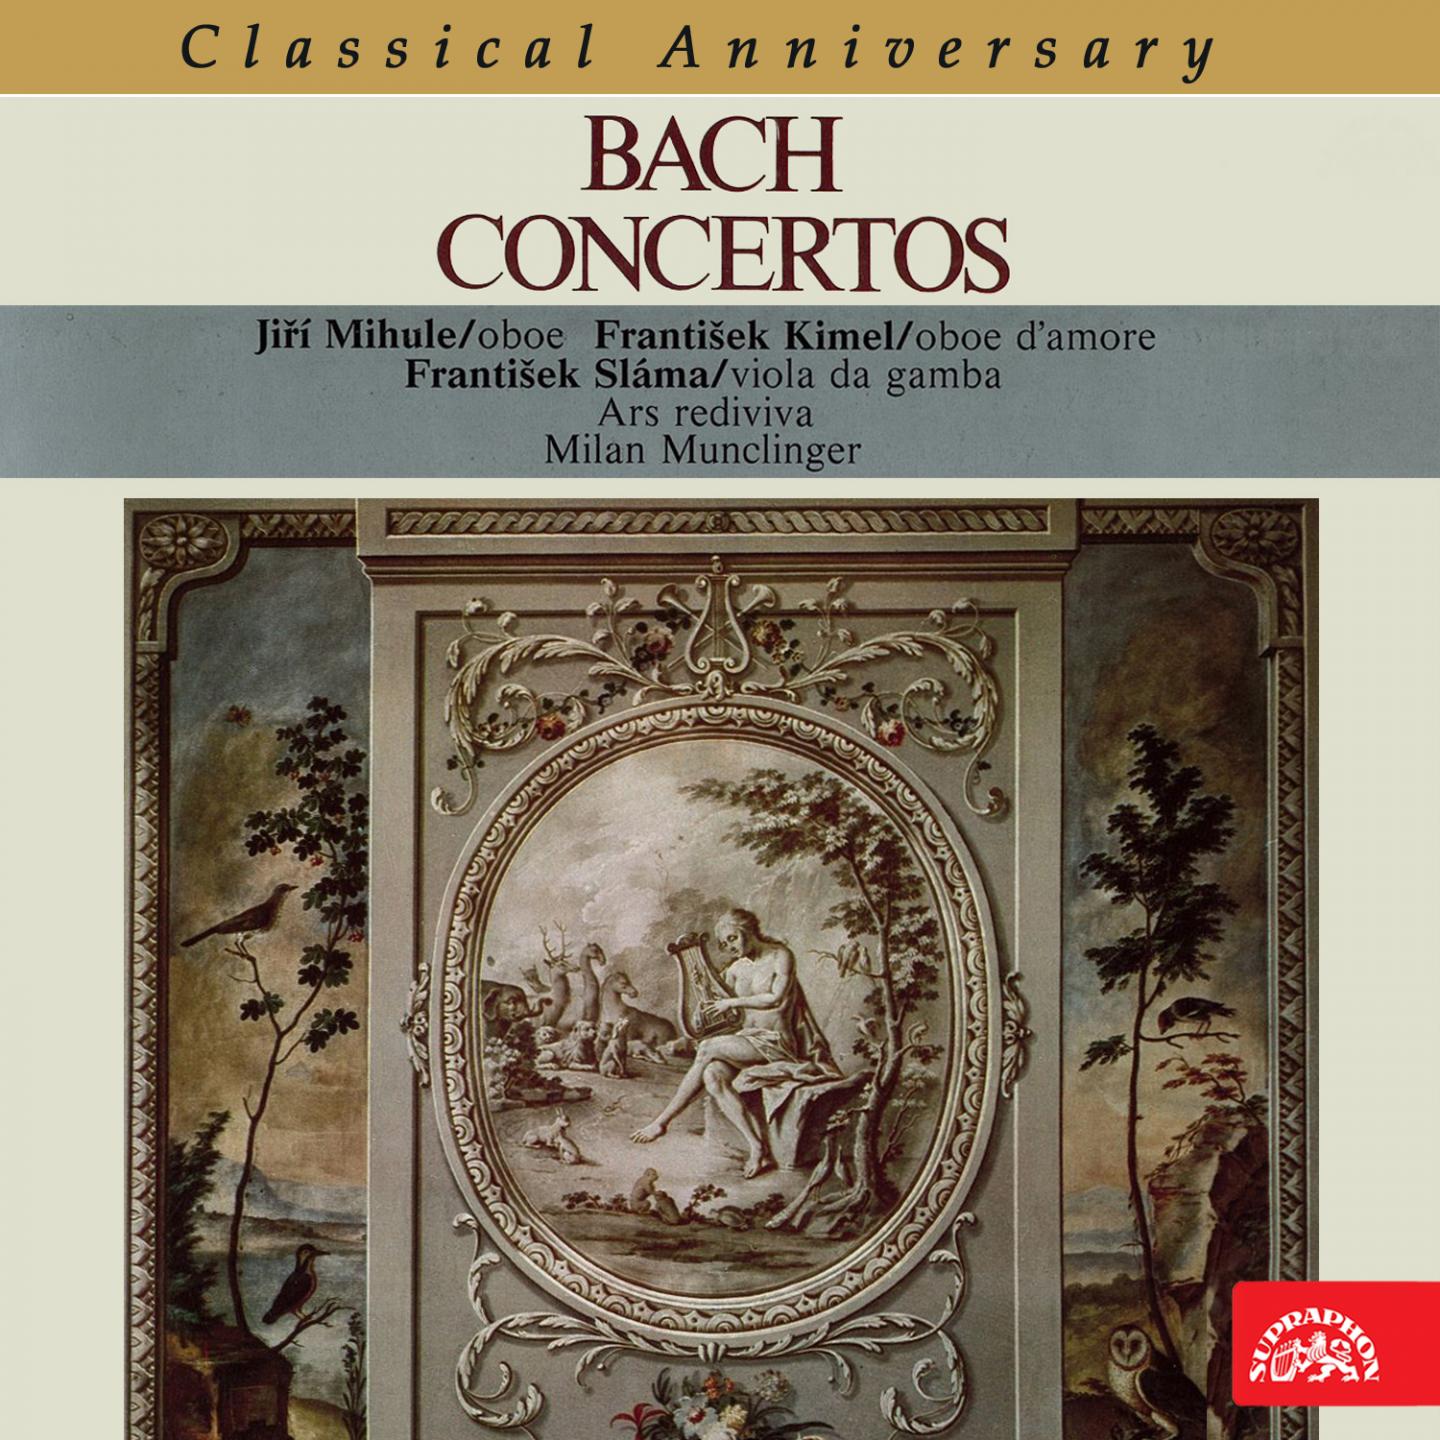 Concerto in G Minor, BWV 1056R: II. Largo